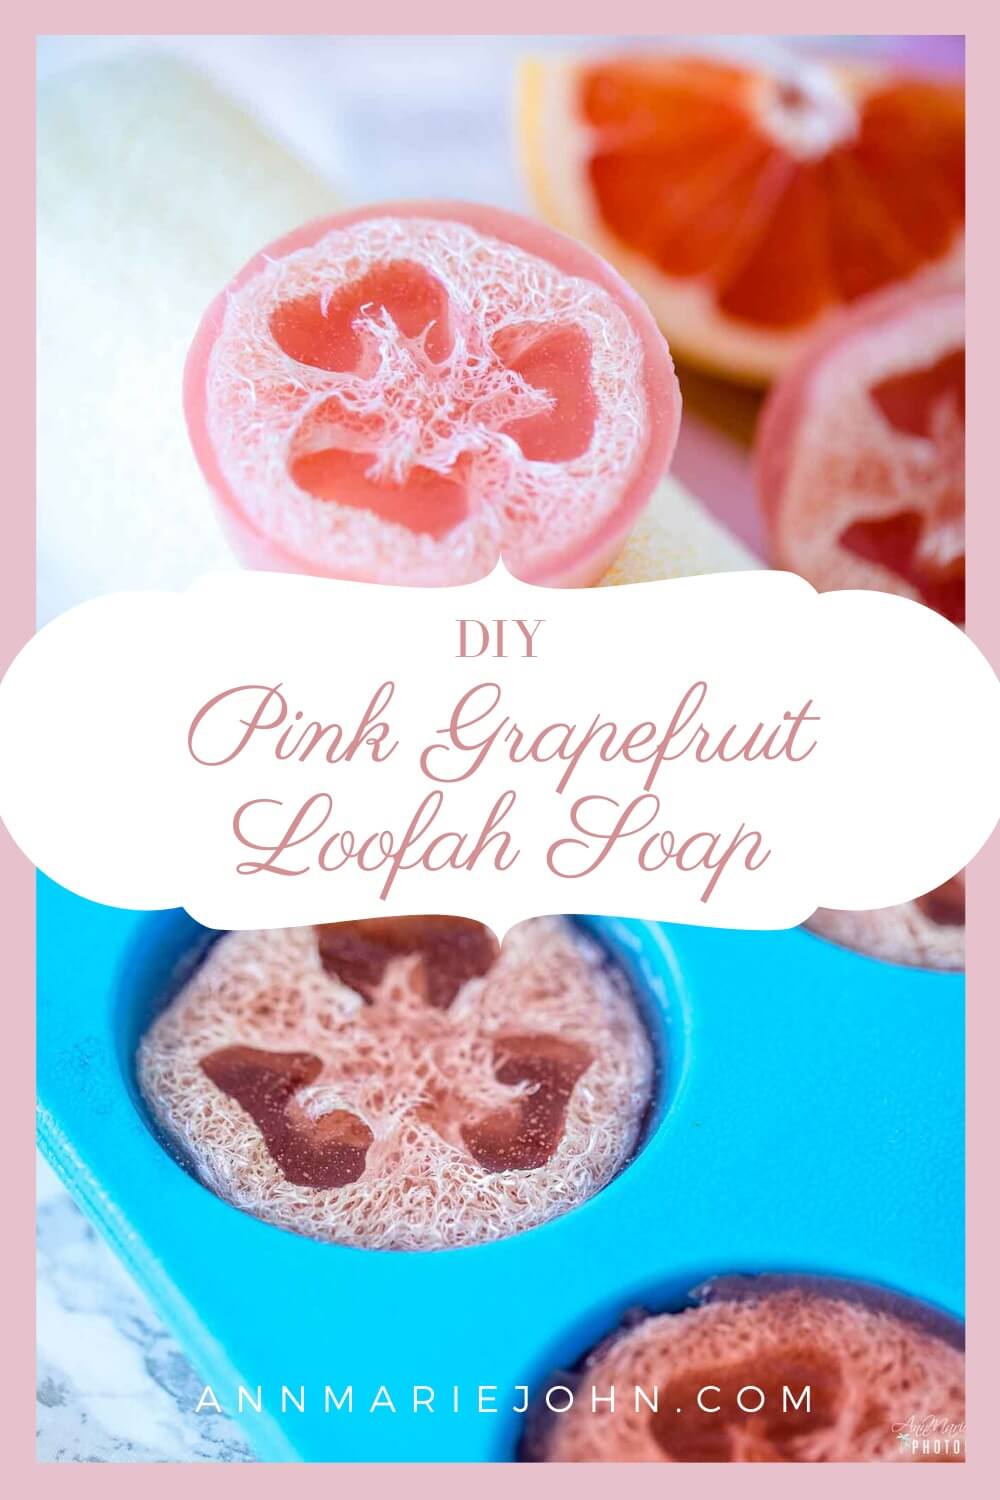 DIY Pink Grapefruit Loofah Soap